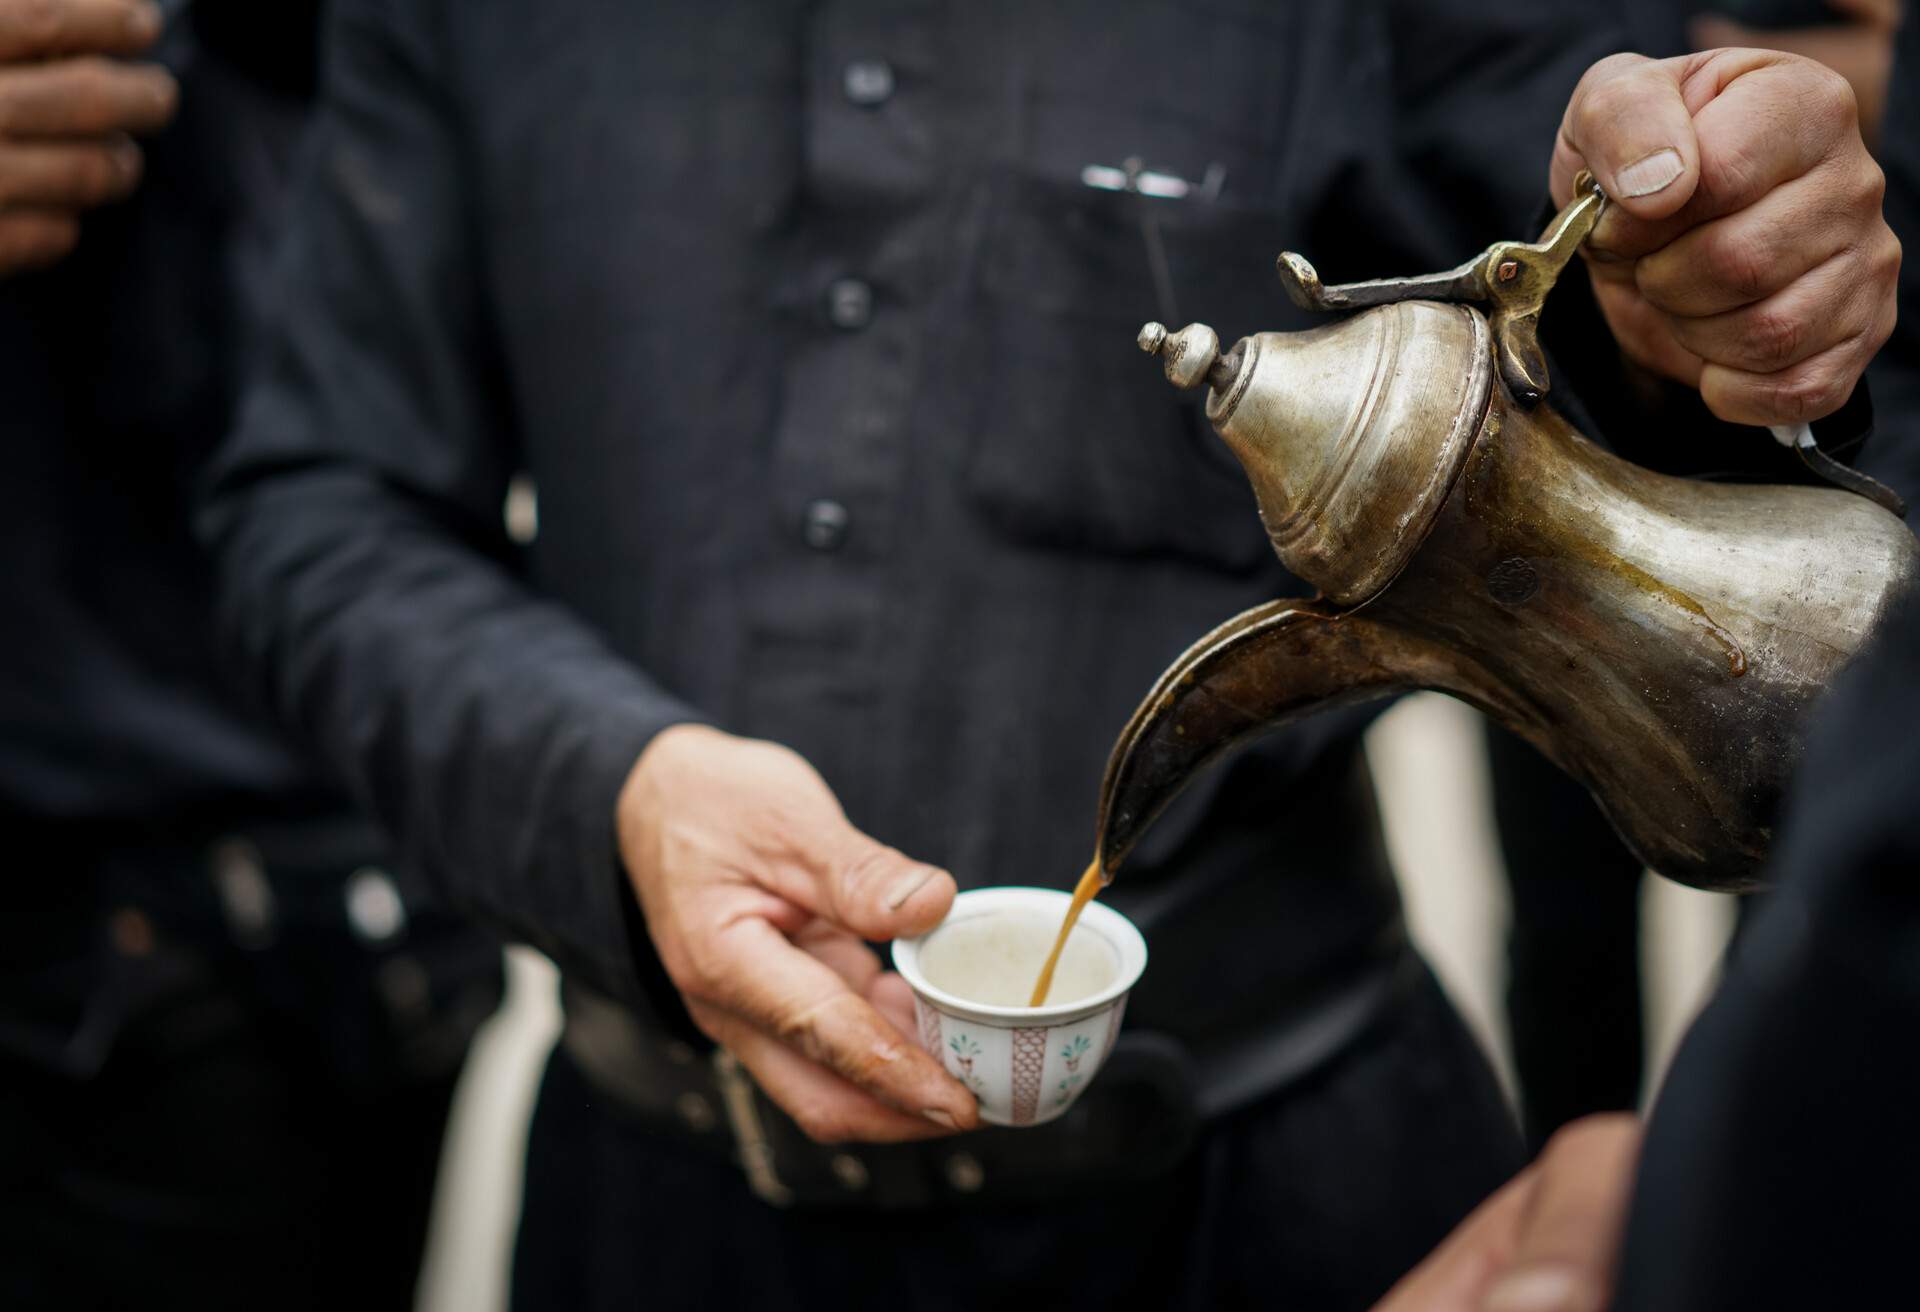 Having traditional Arabian coffee with friends